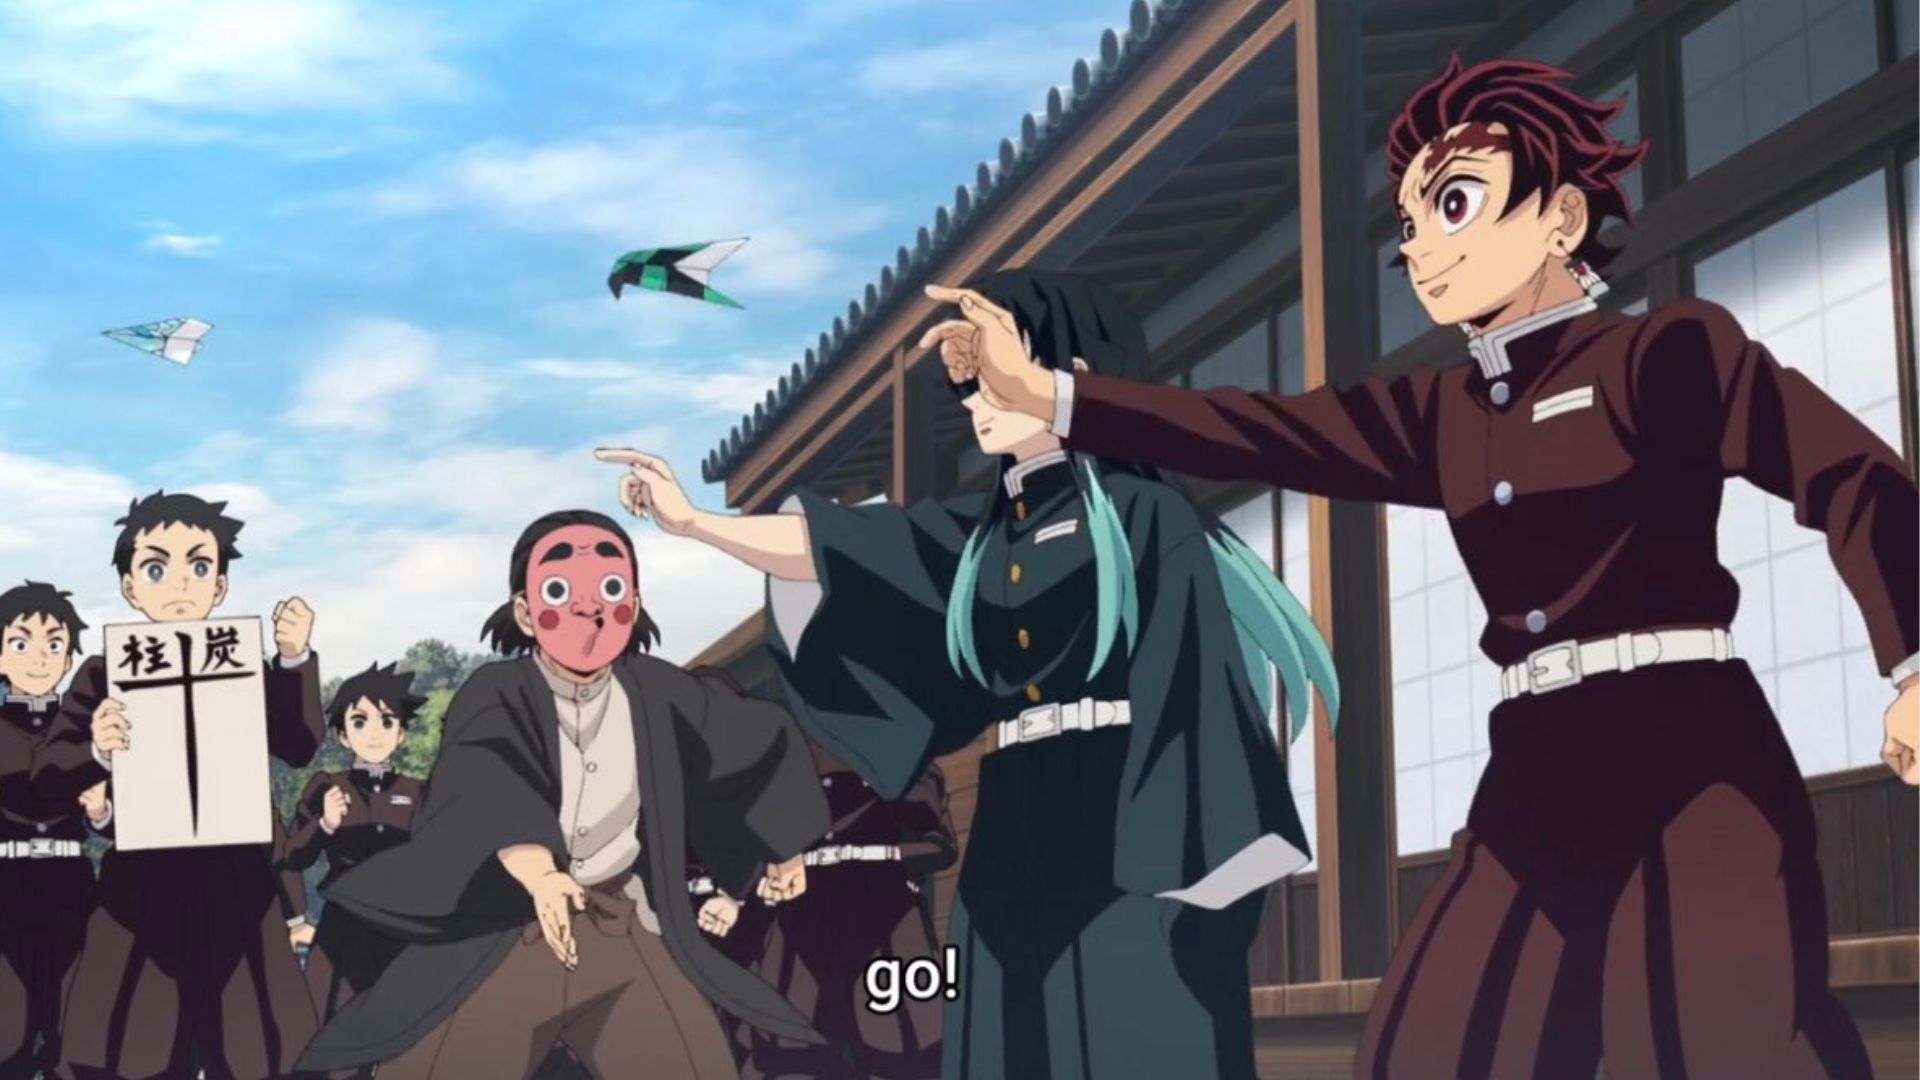 Tanjiro and Muichiro throw thei paper plane as the members of the demon slayer crops cheer for Tanjiro